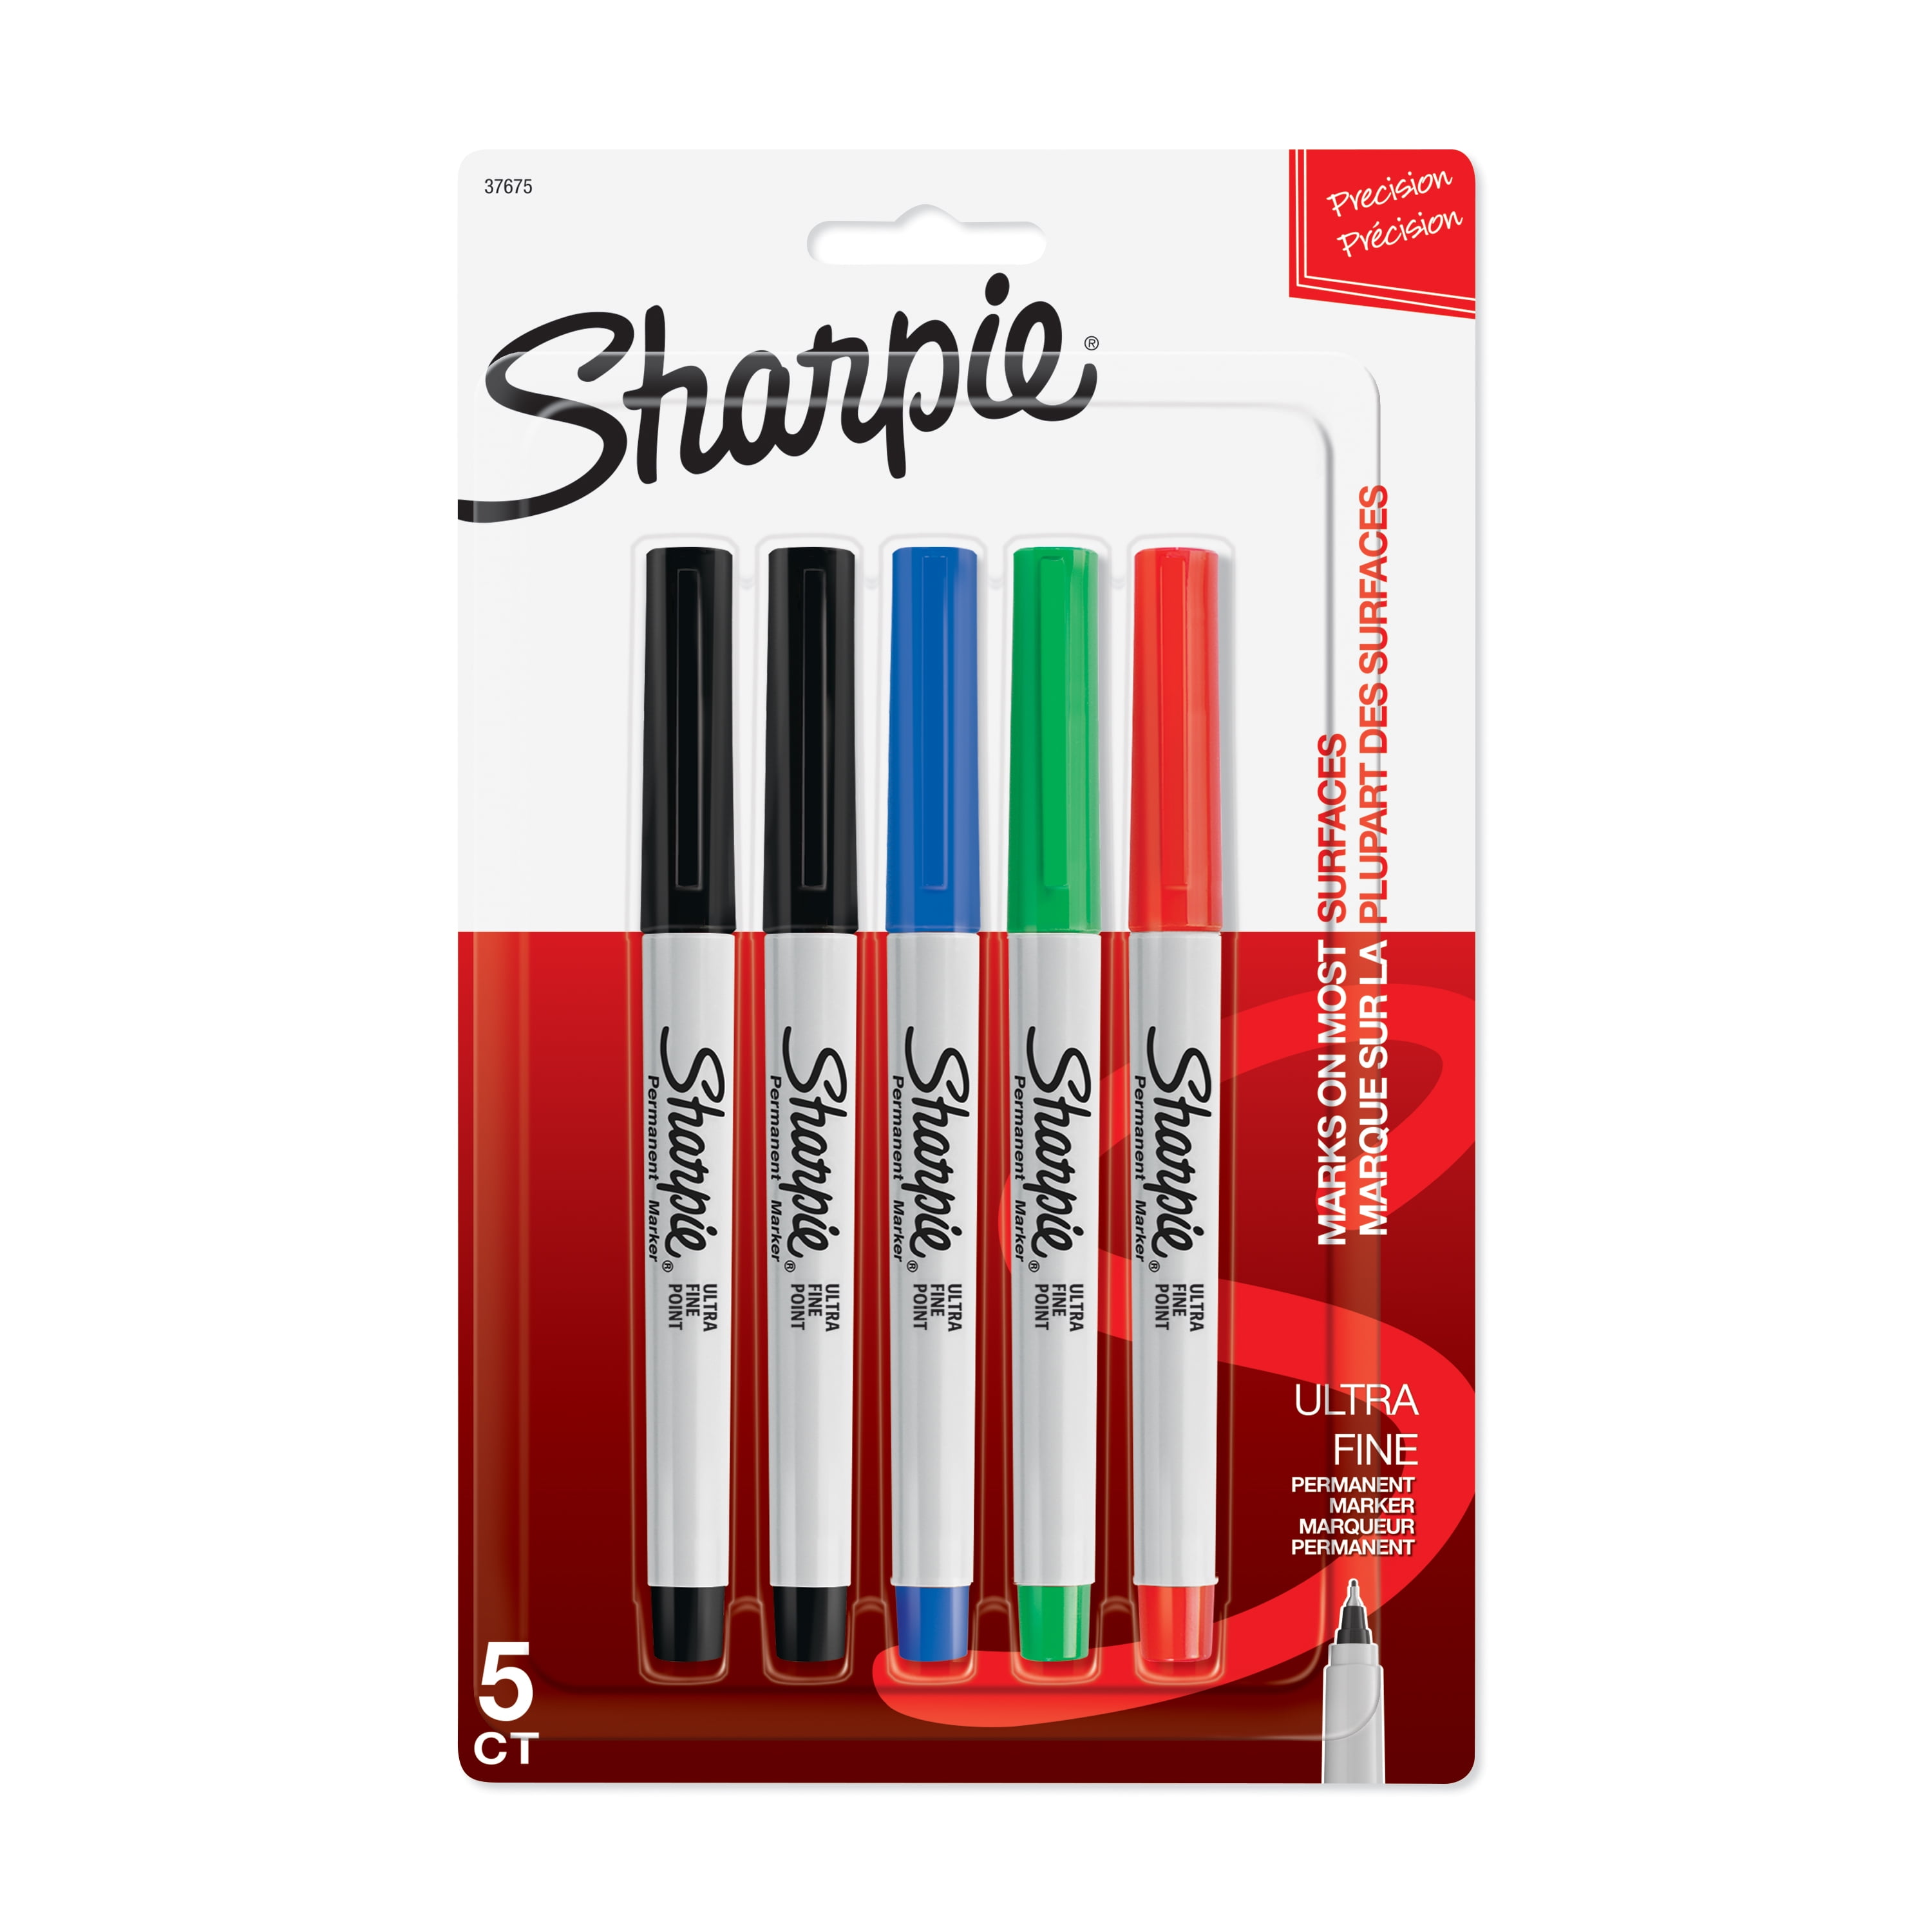 Sharpie 34pk Permanent Markers Ultra Fine Tip Multicolored 34 ct